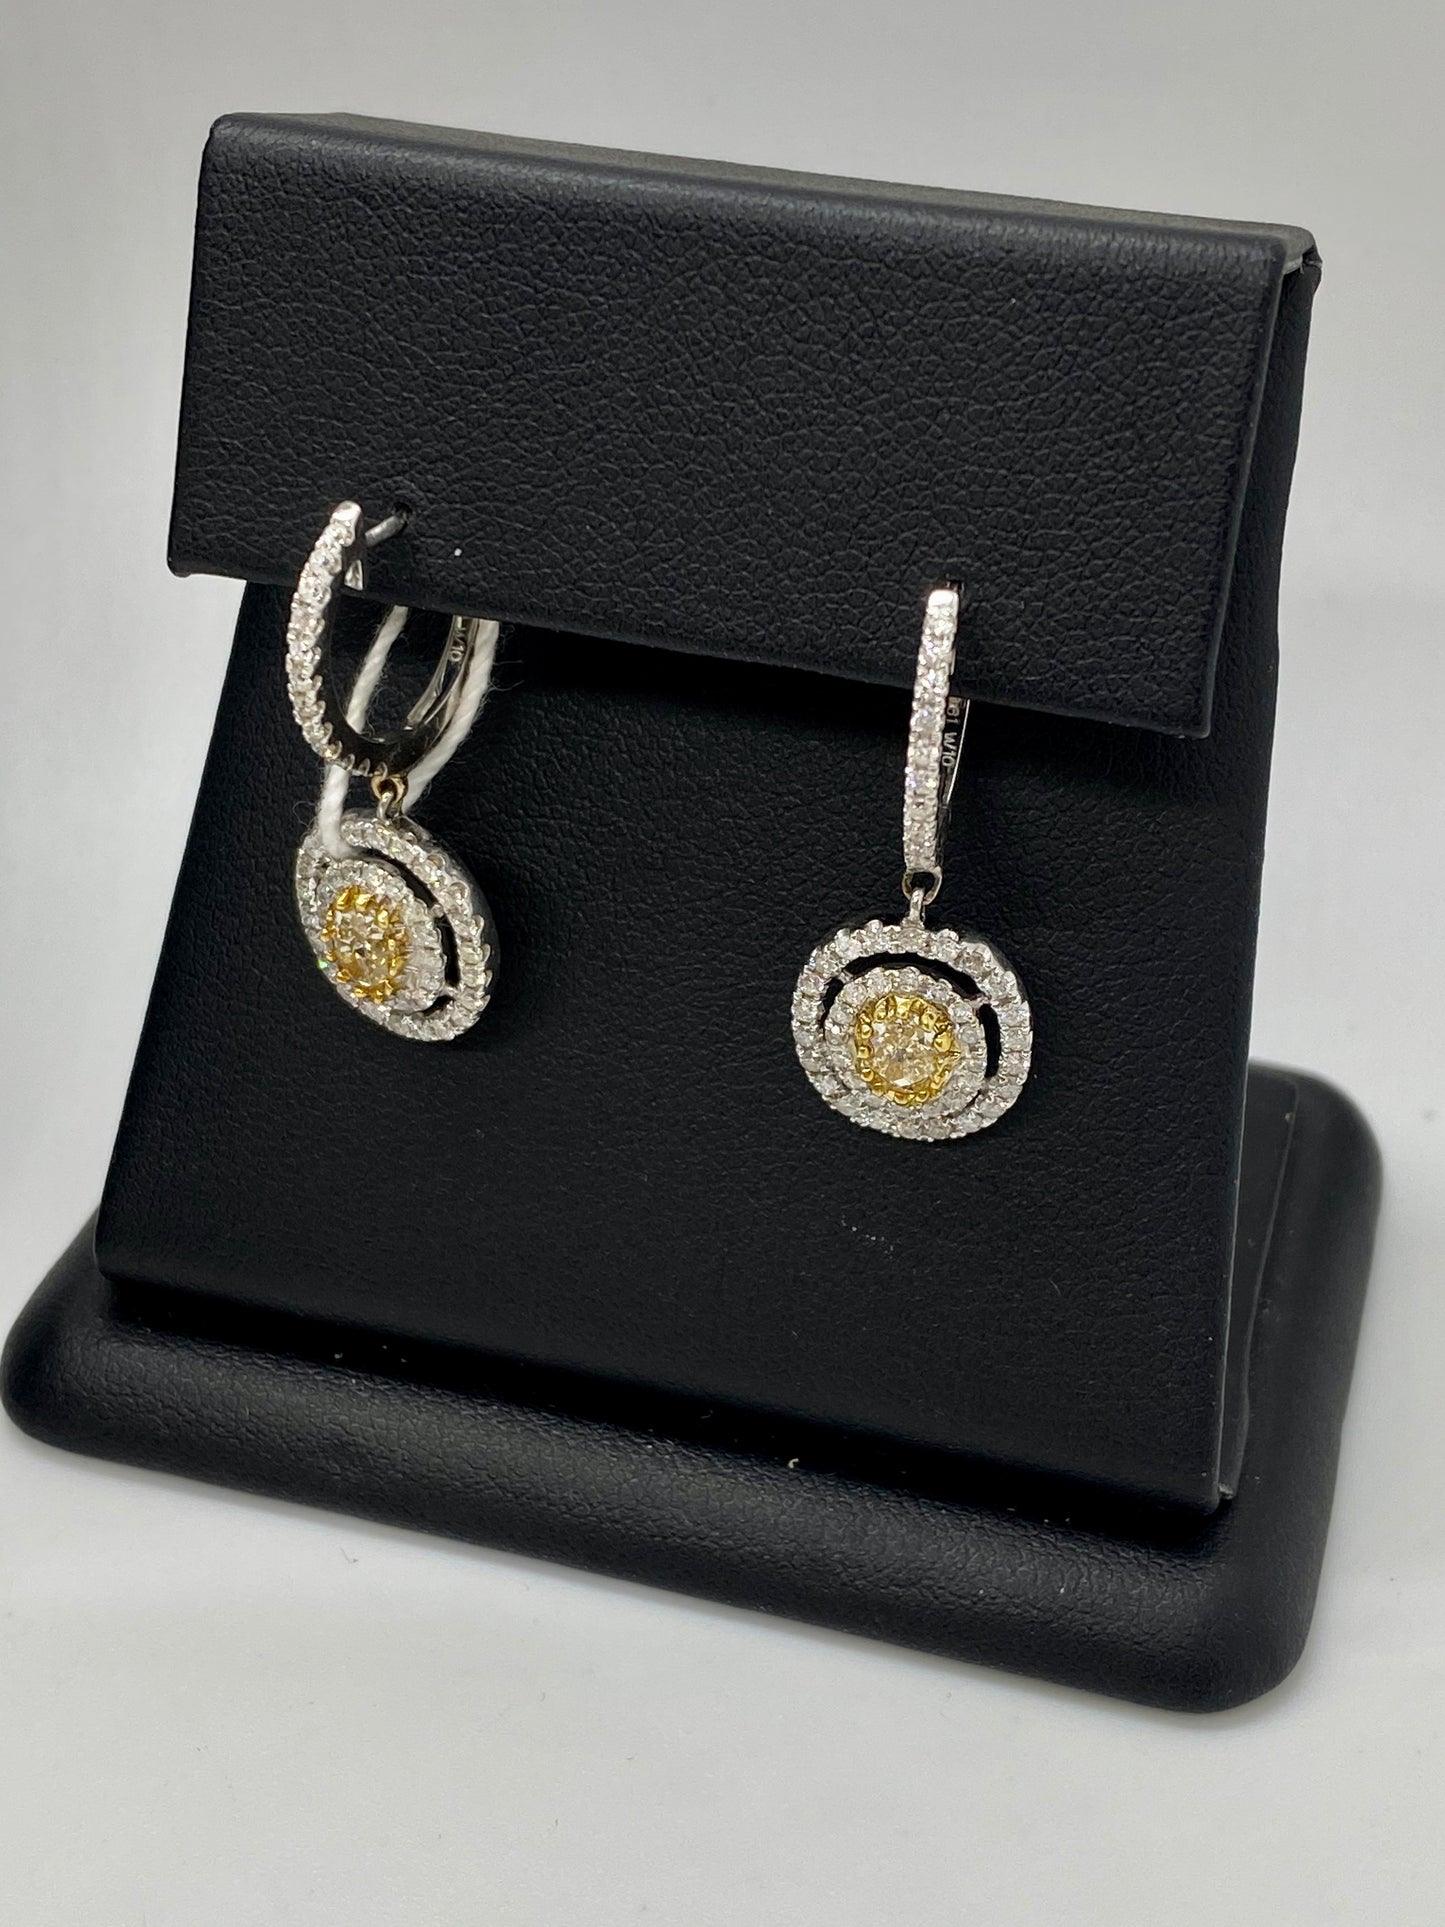 Yellow Diamond Earrings E08775